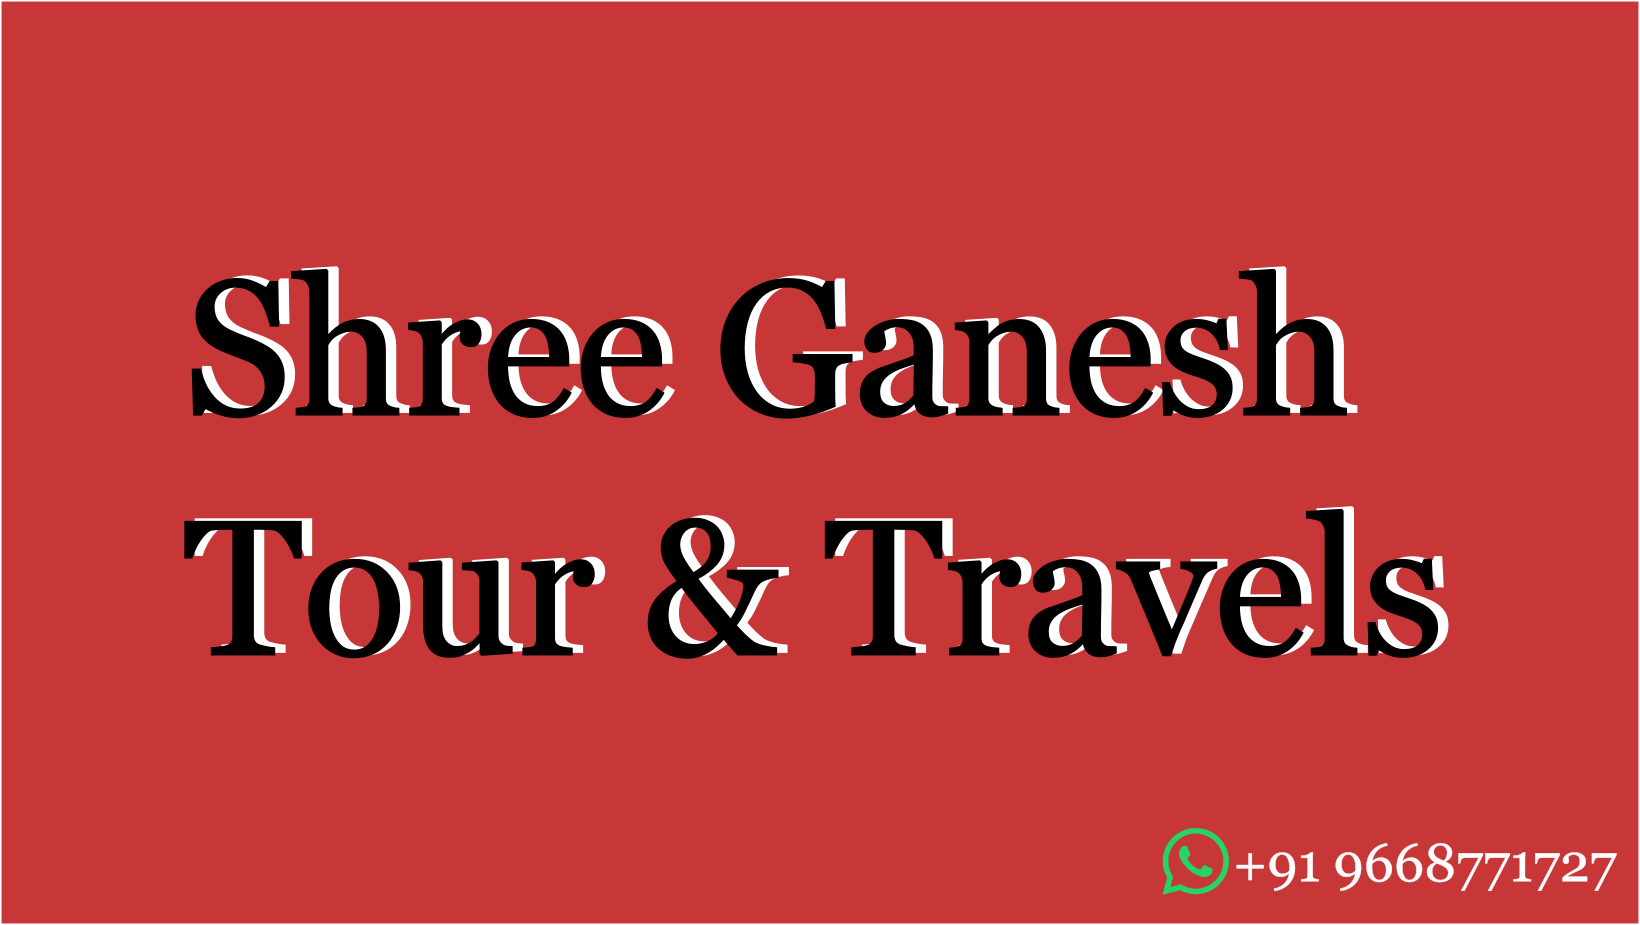 Shree Ganesh Tour & Travels